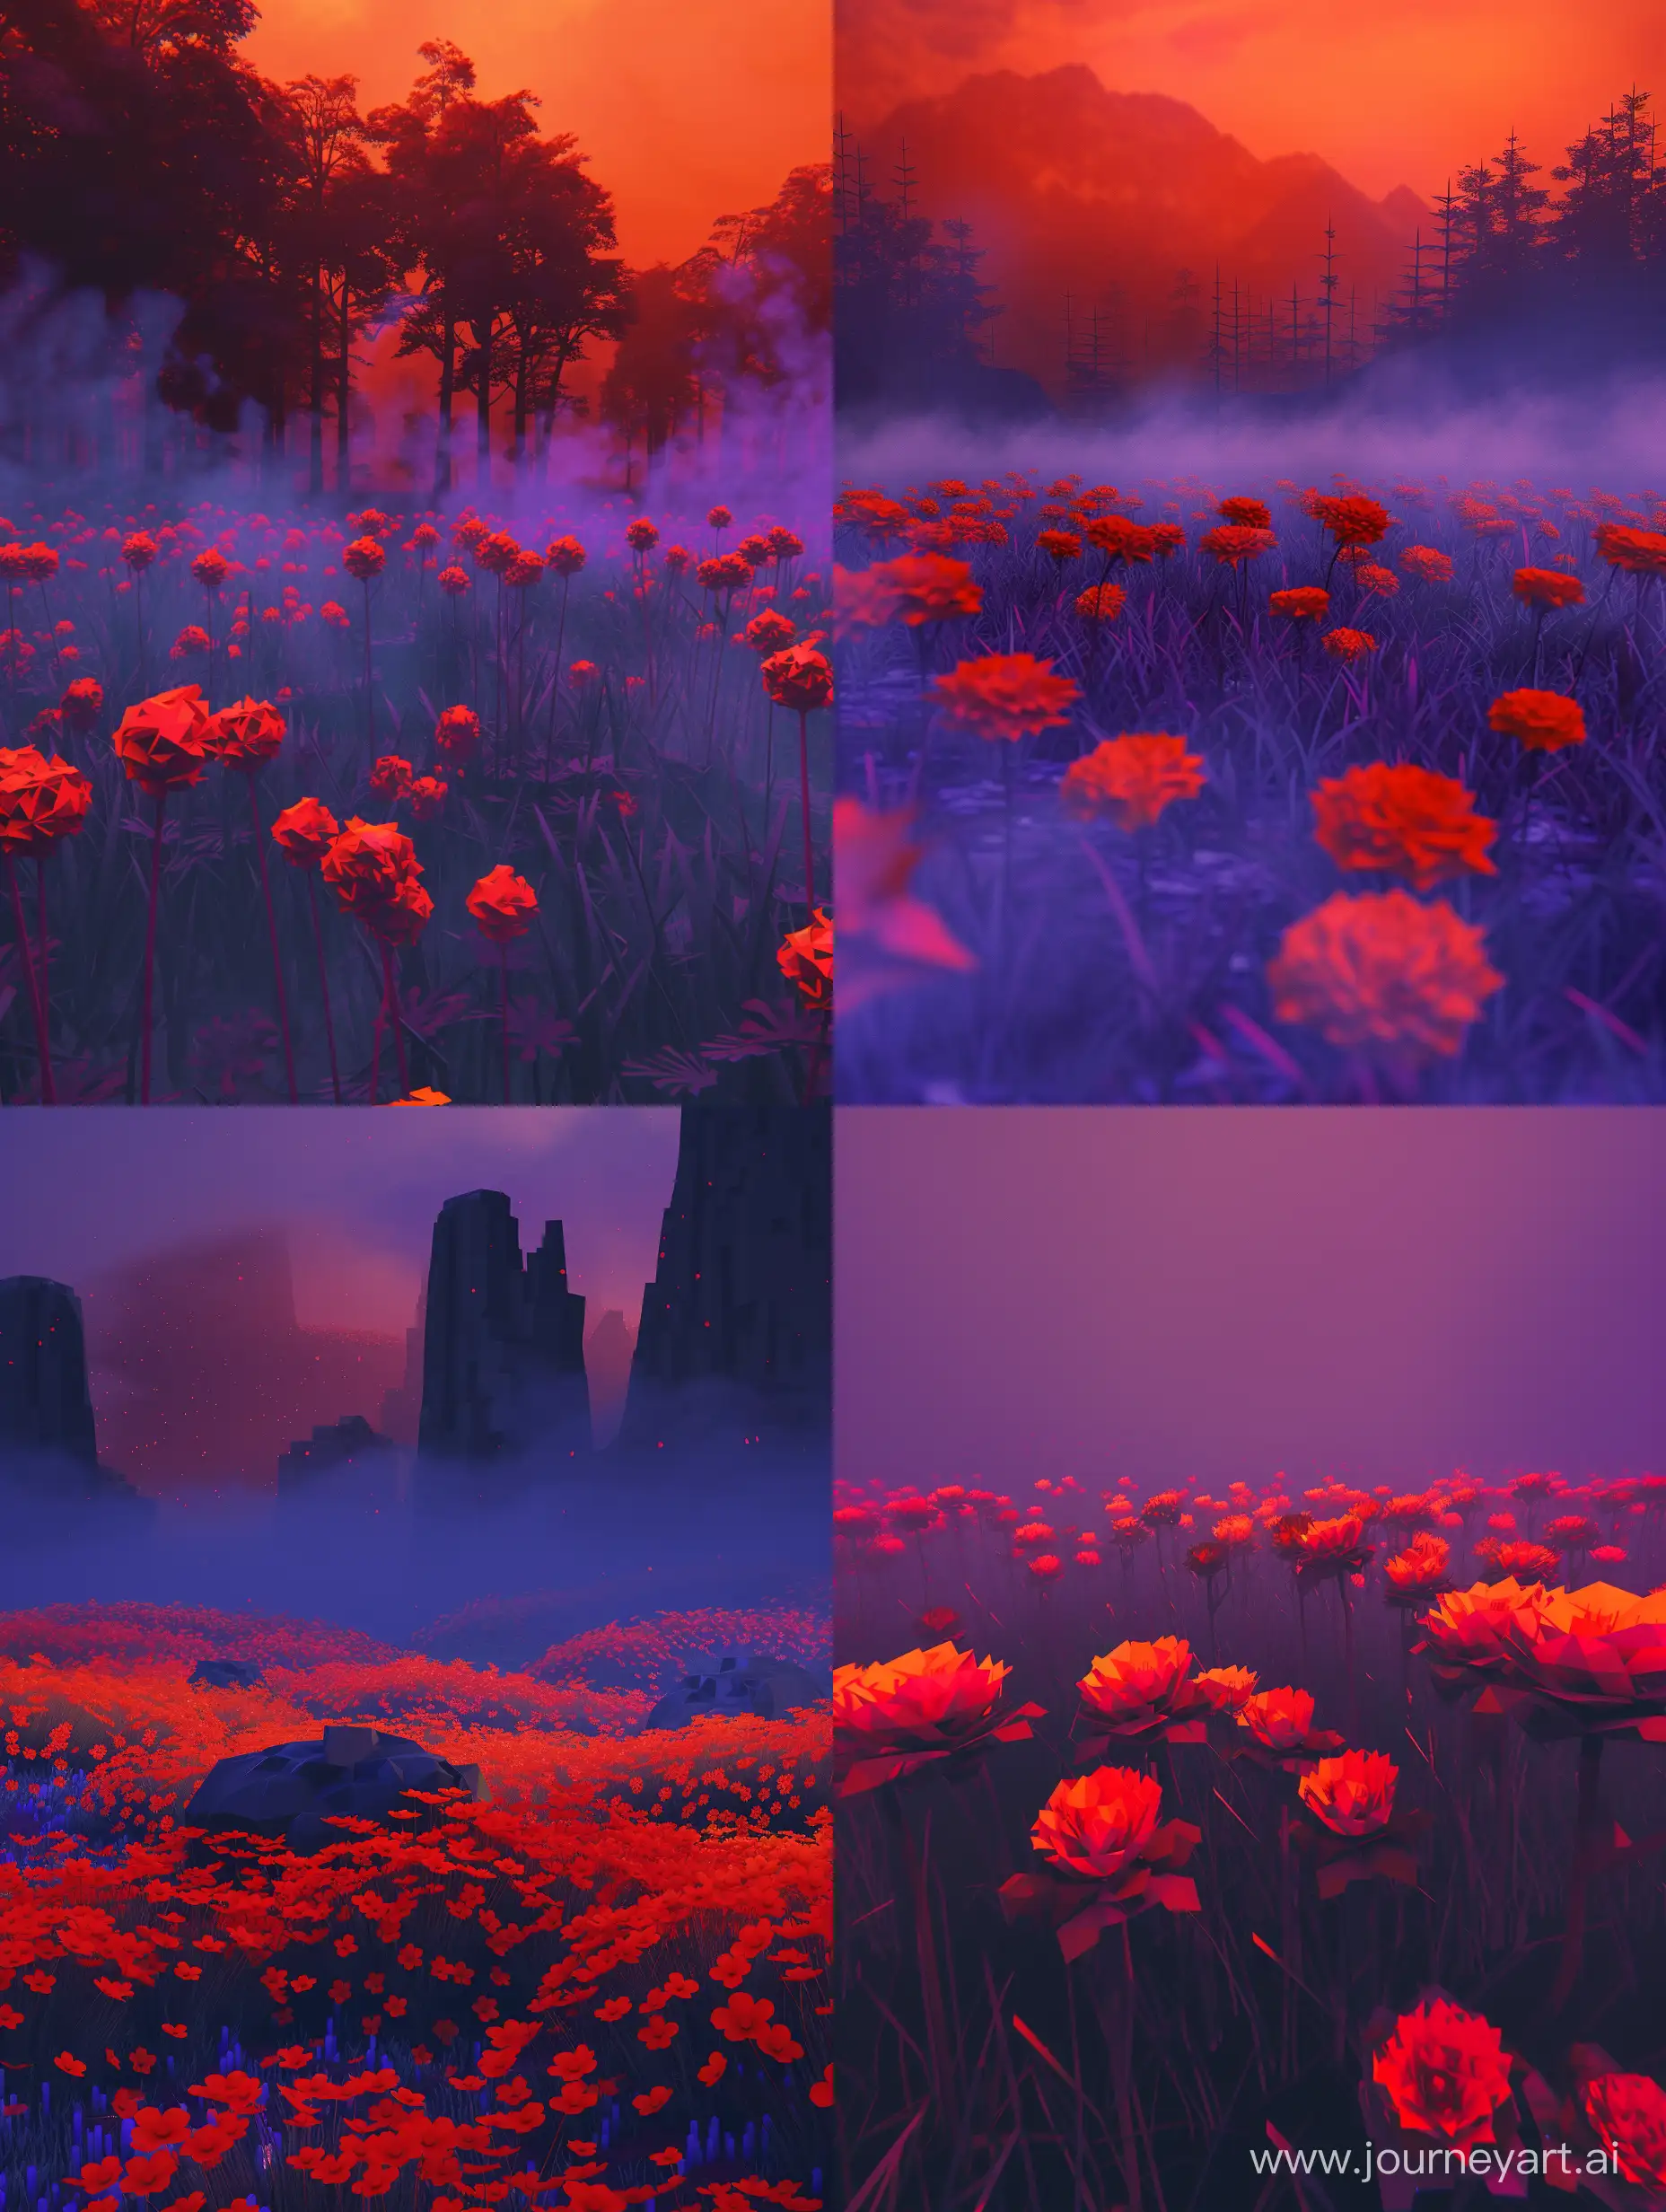 red orange purple 1990s video game flower field landscape scene, nostalgia, nighttime, fog, haunting, low poly, computer graphics, digital glitch